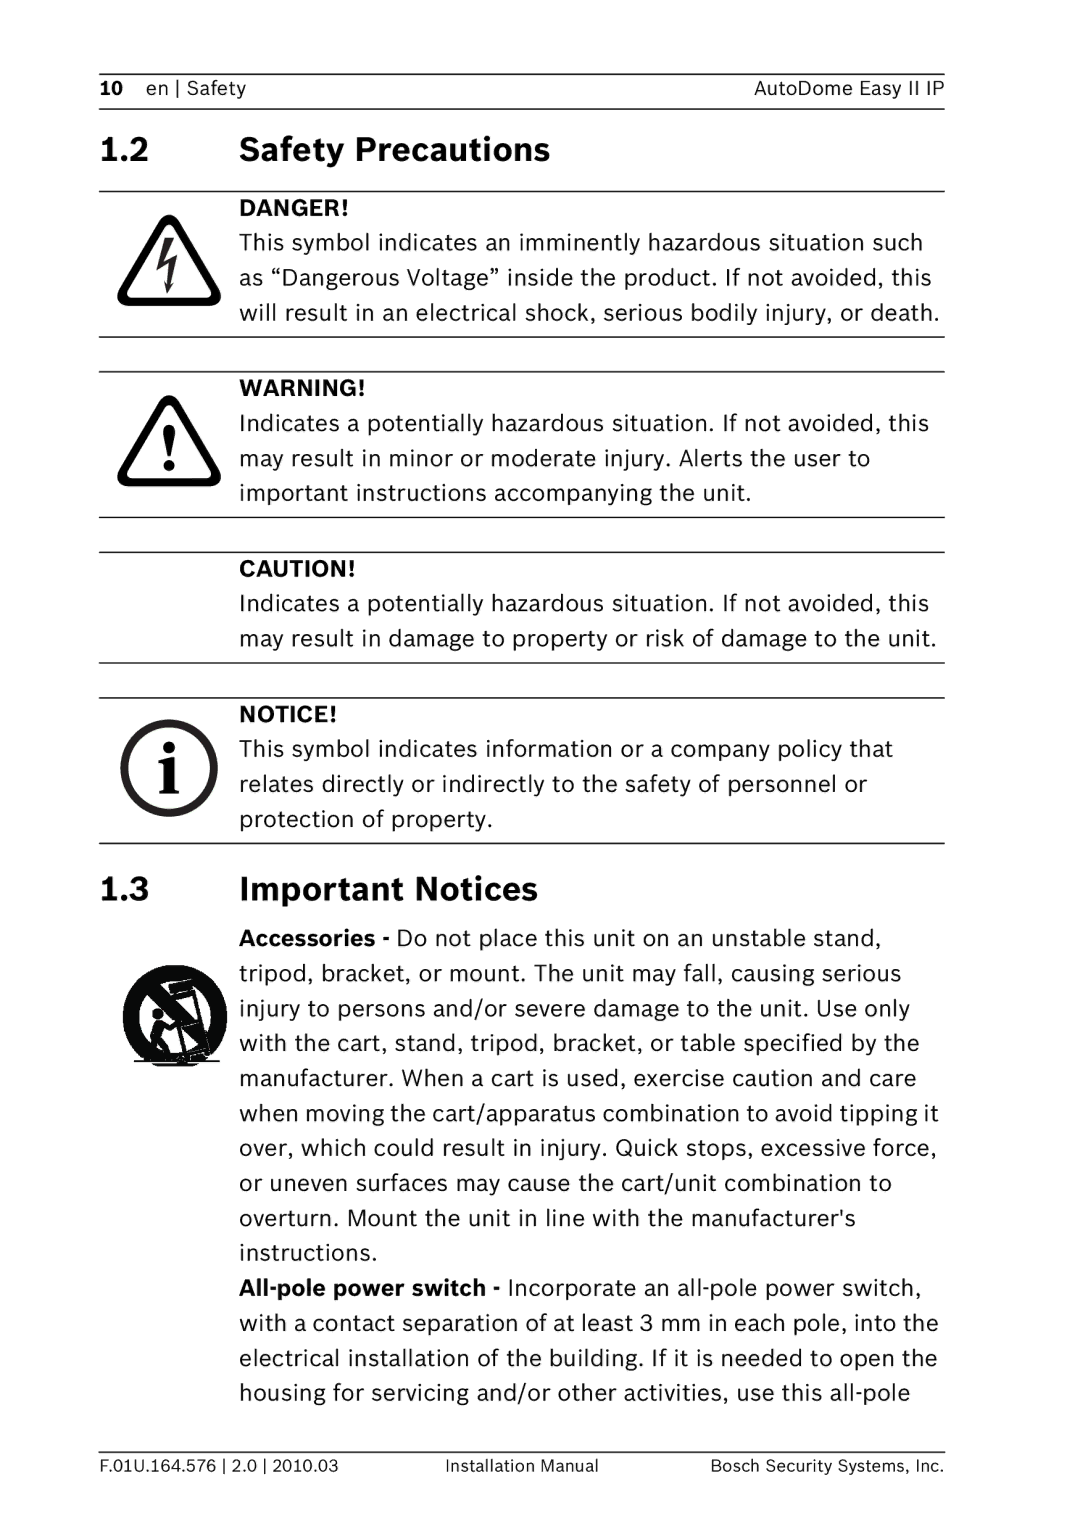 Bosch Appliances VEZ installation manual Safety Precautions, Important Notices 